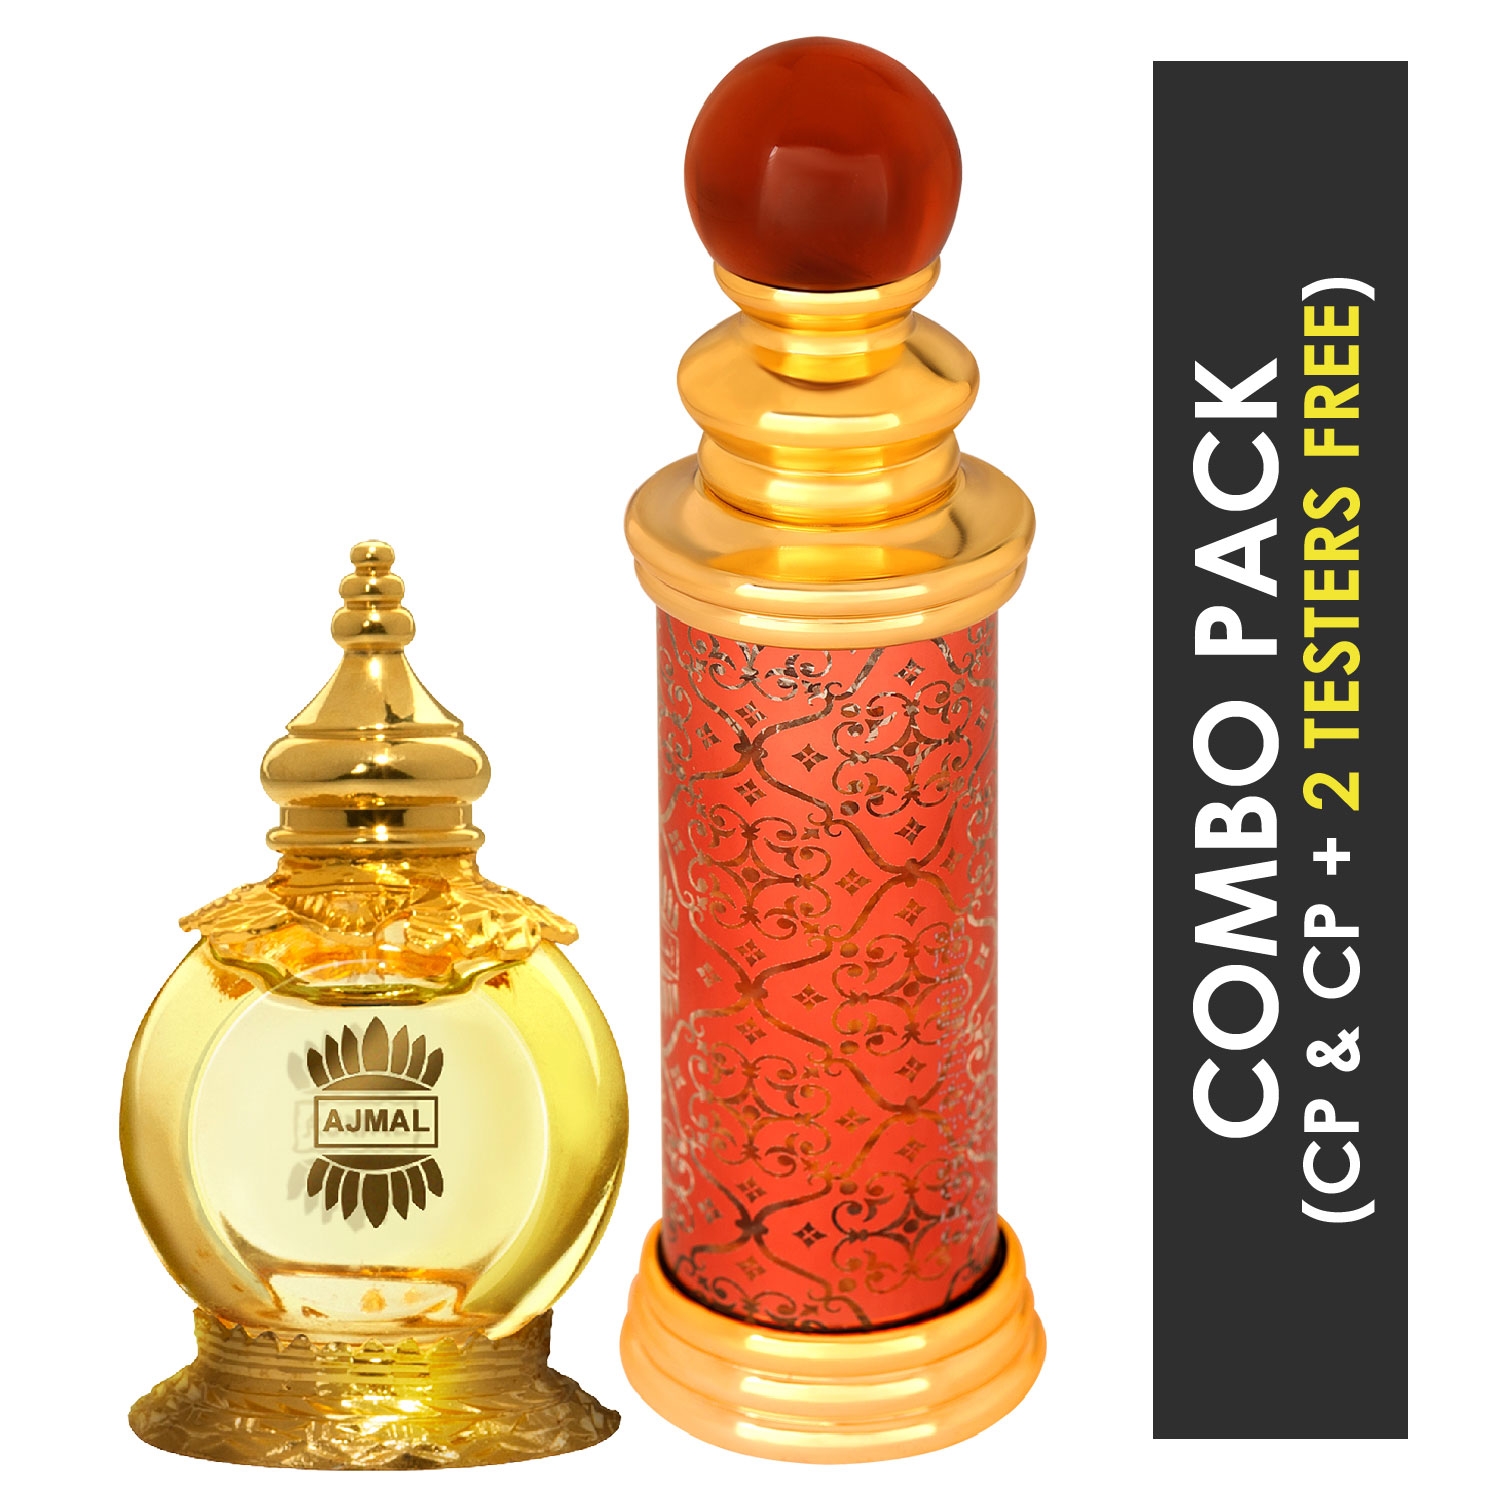 Ajmal | Ajmal Mukhallat AL Wafa Concentrated Perfume Attar 12ml for Unisex and Classic Oud Concentrated Perfume Attar 10ml for Unisex + 2 Parfum Testers FREE